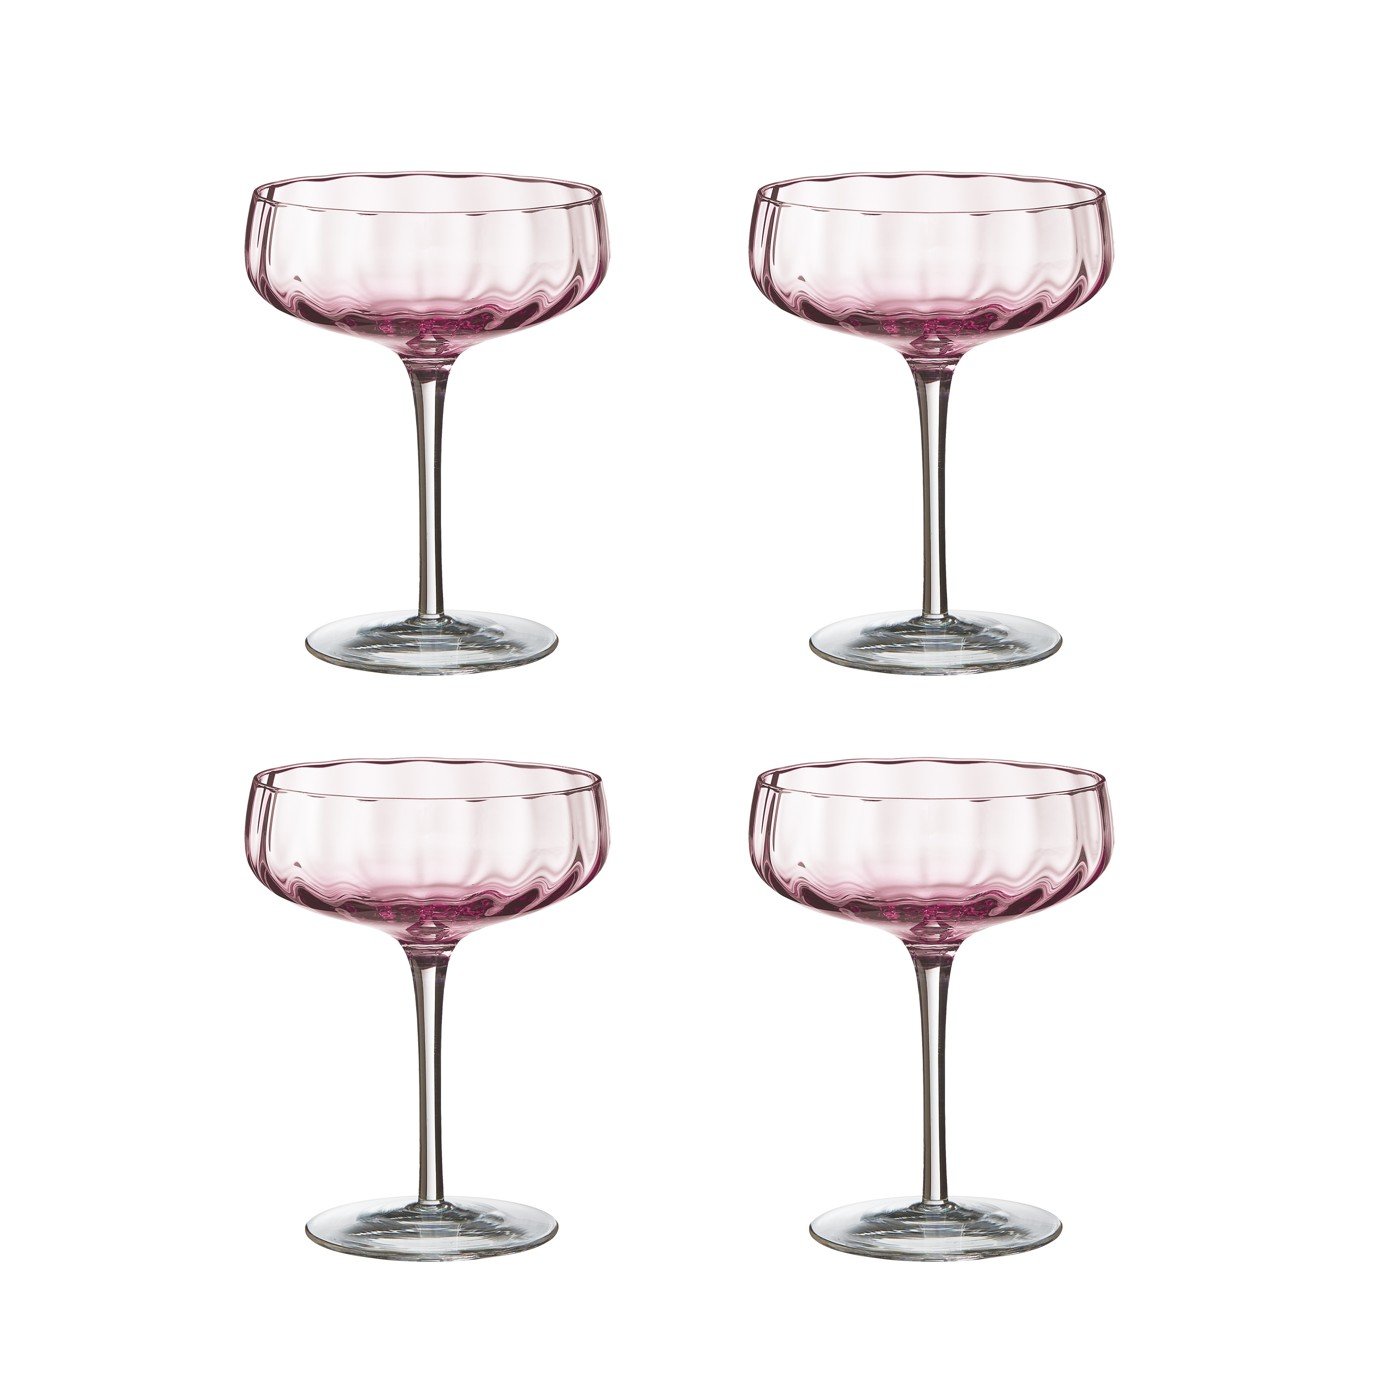 SØHOLM - 4 stk - Sonja champagne/cocktail glas - Raspberry rød